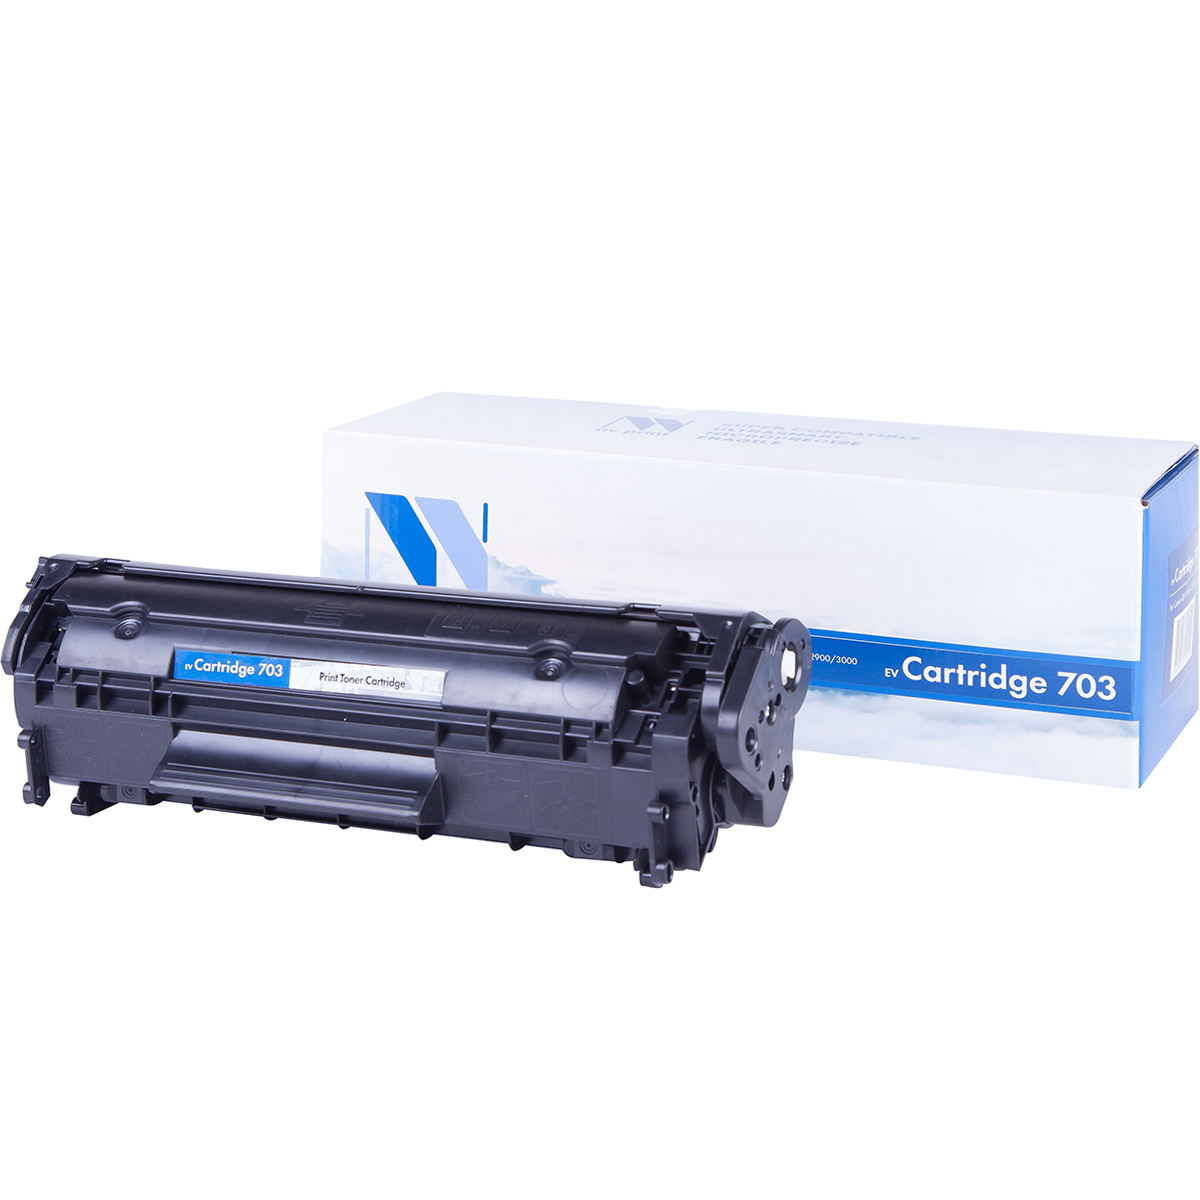 Картридж лазерный NV Print NV-703 (Canon i-SENSYS LBP2900, 2900B, 3000, 2000стр.)